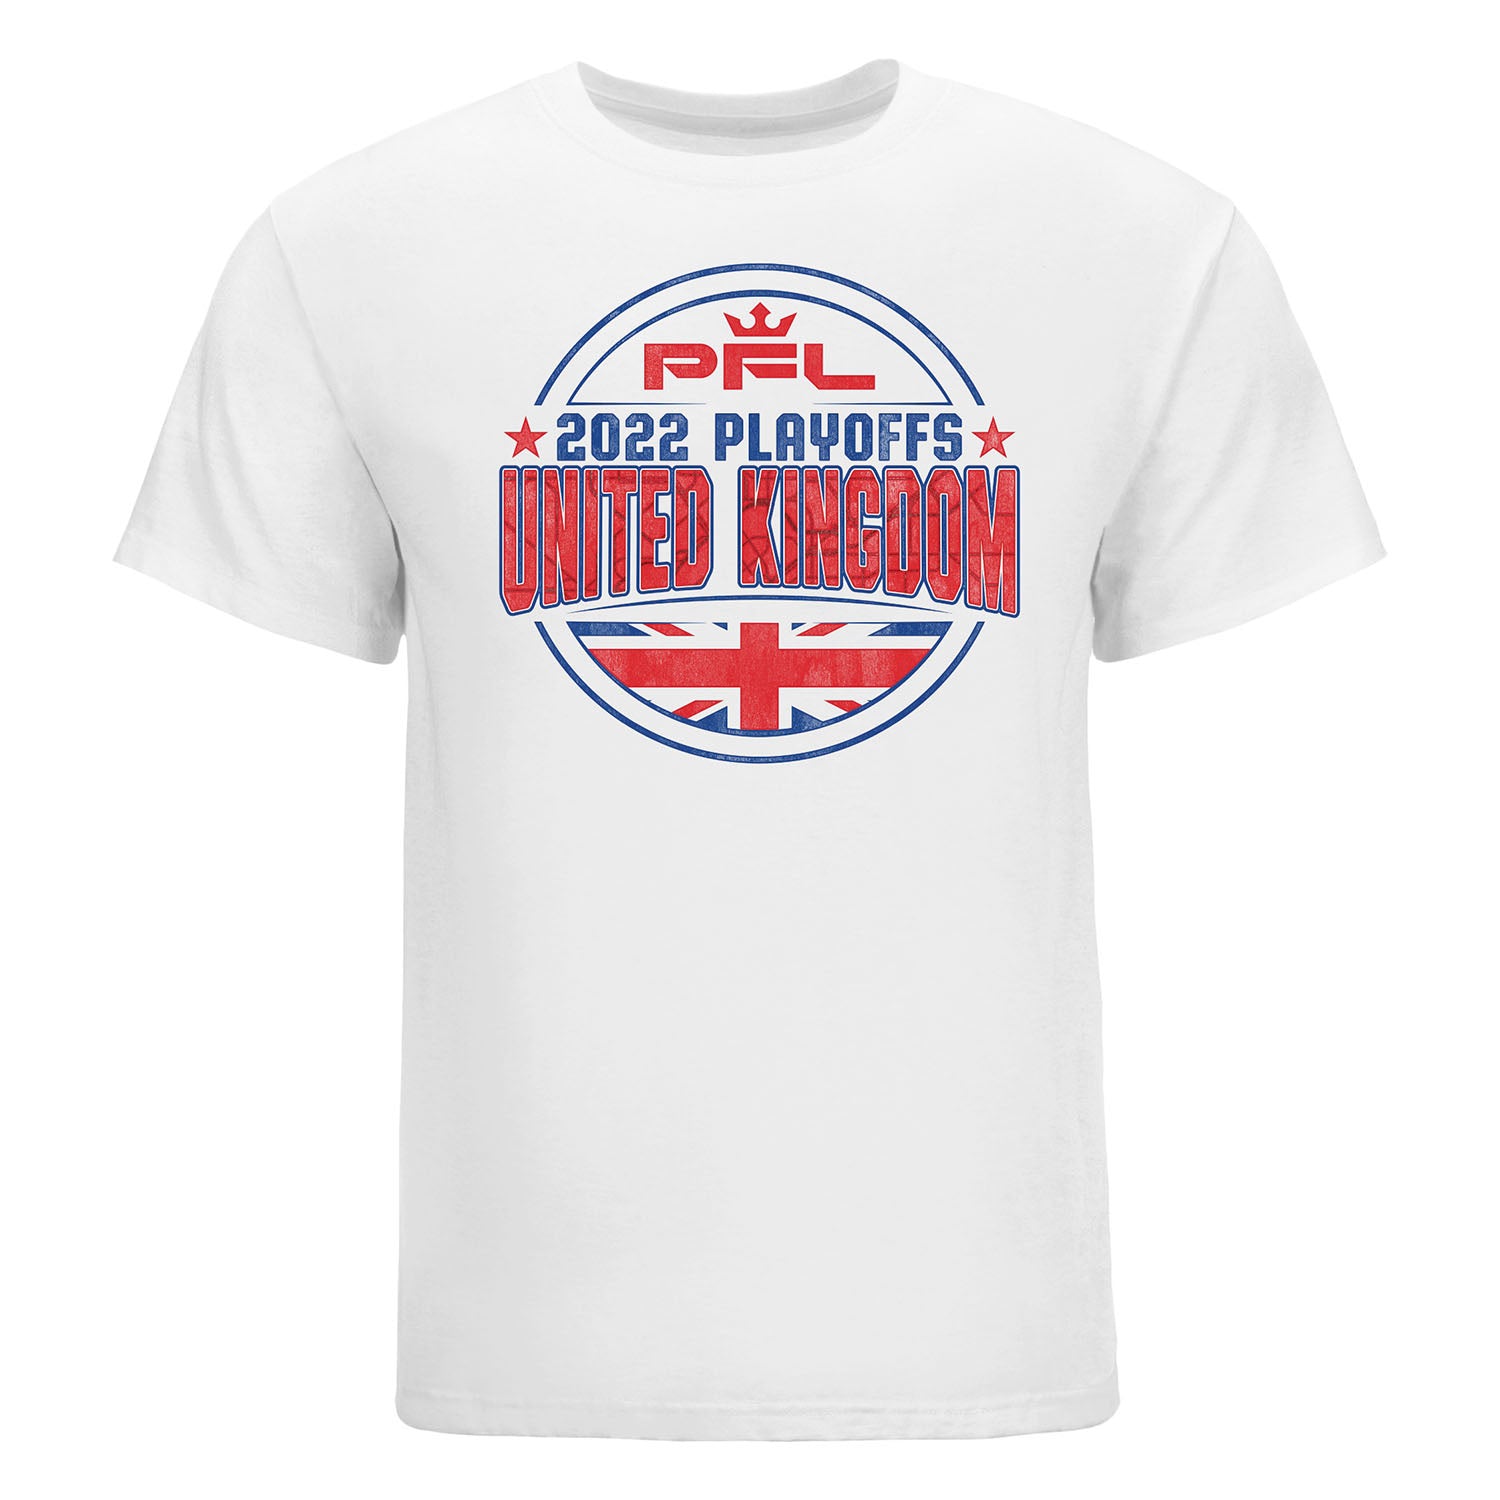 PFL Playoffs T-Shirt - United Kingdom in White - Front View